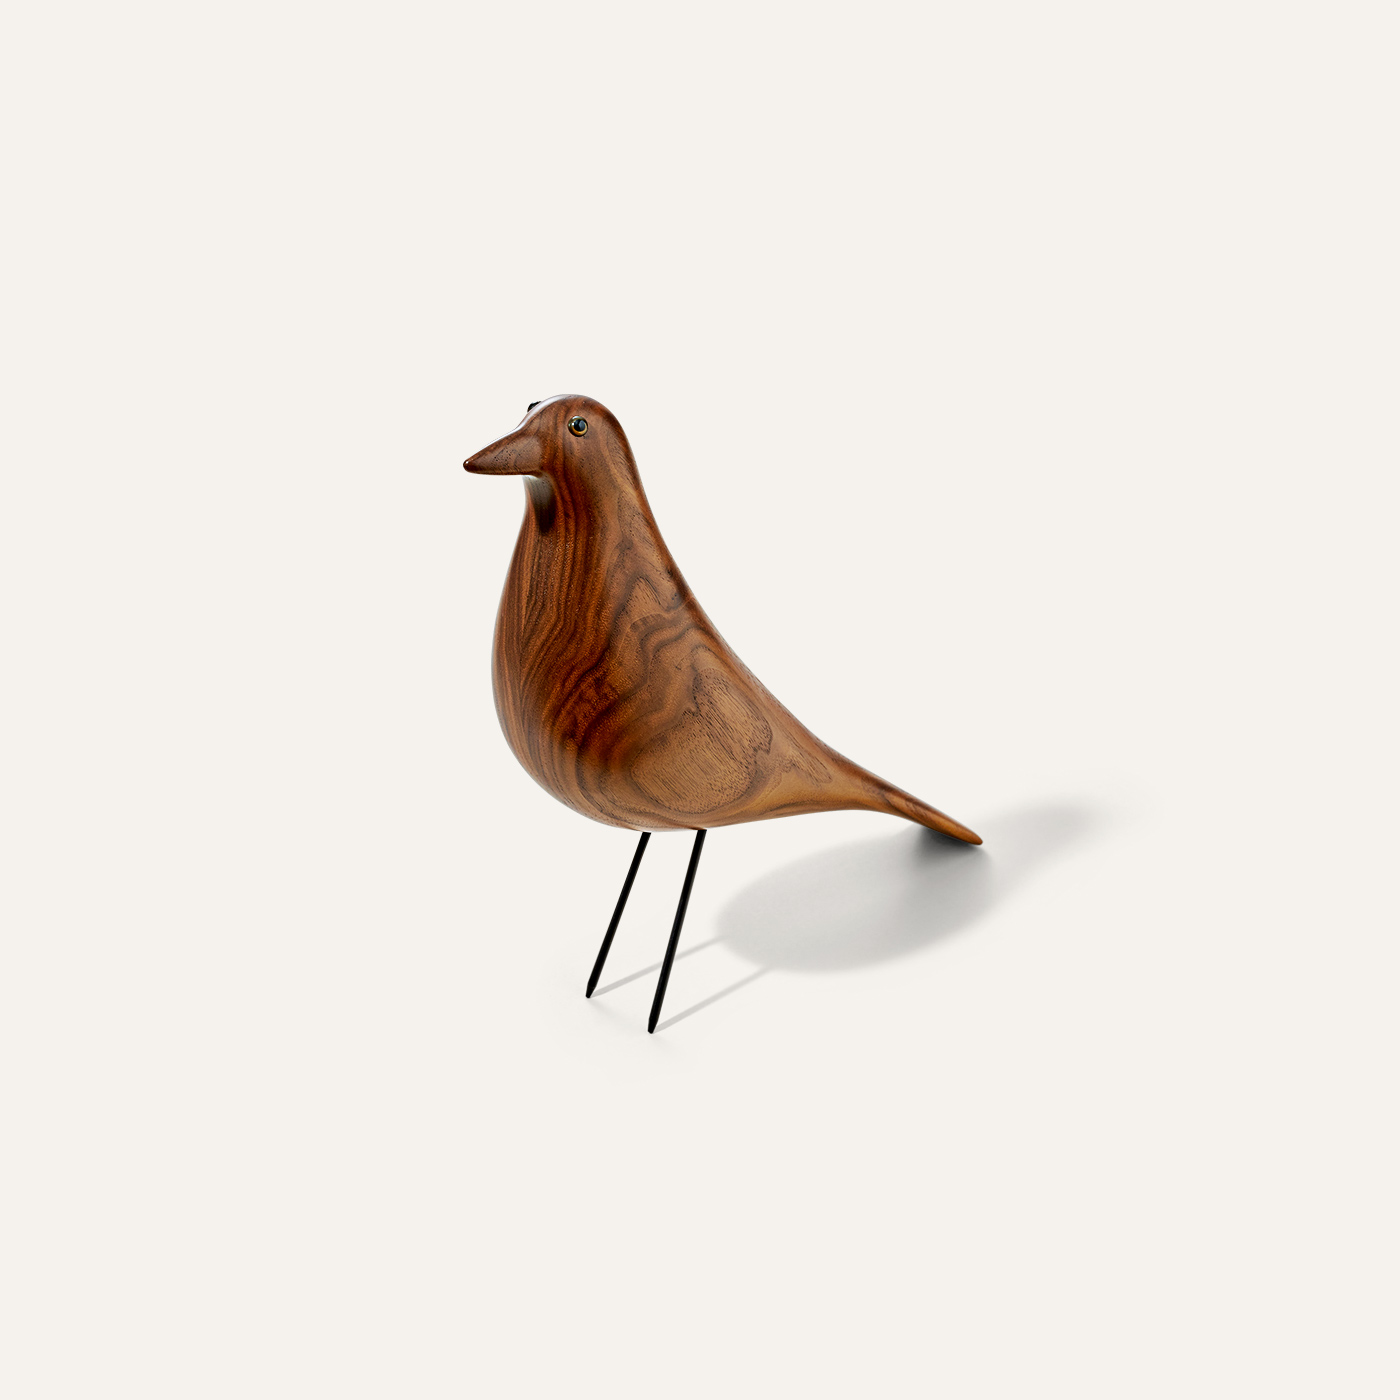 Eames bird object